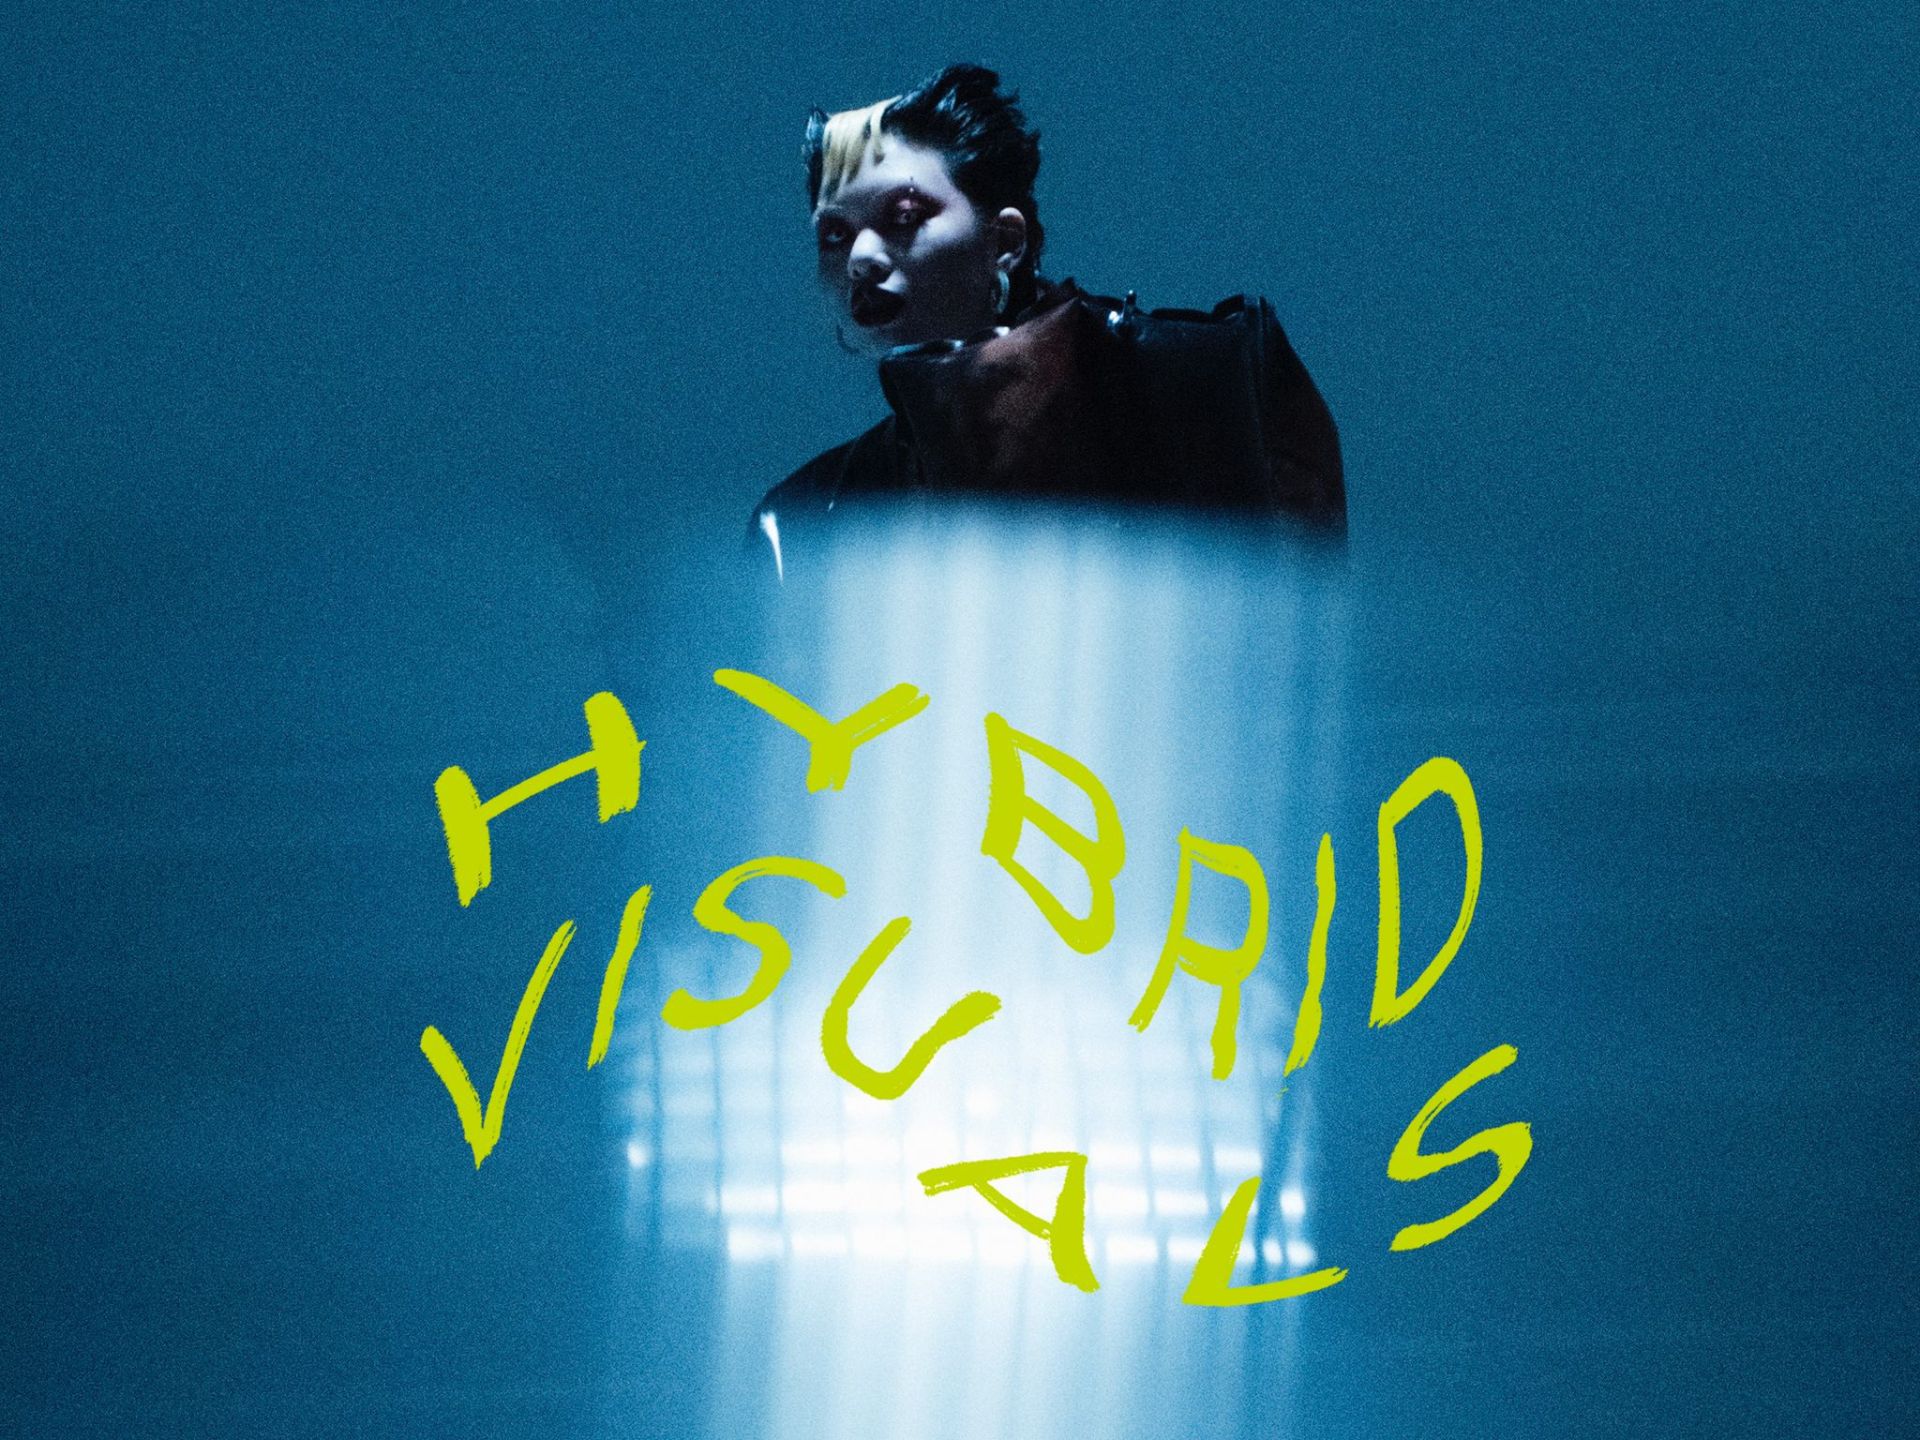 Film, Exhibition, Performance | Hybrid visuals